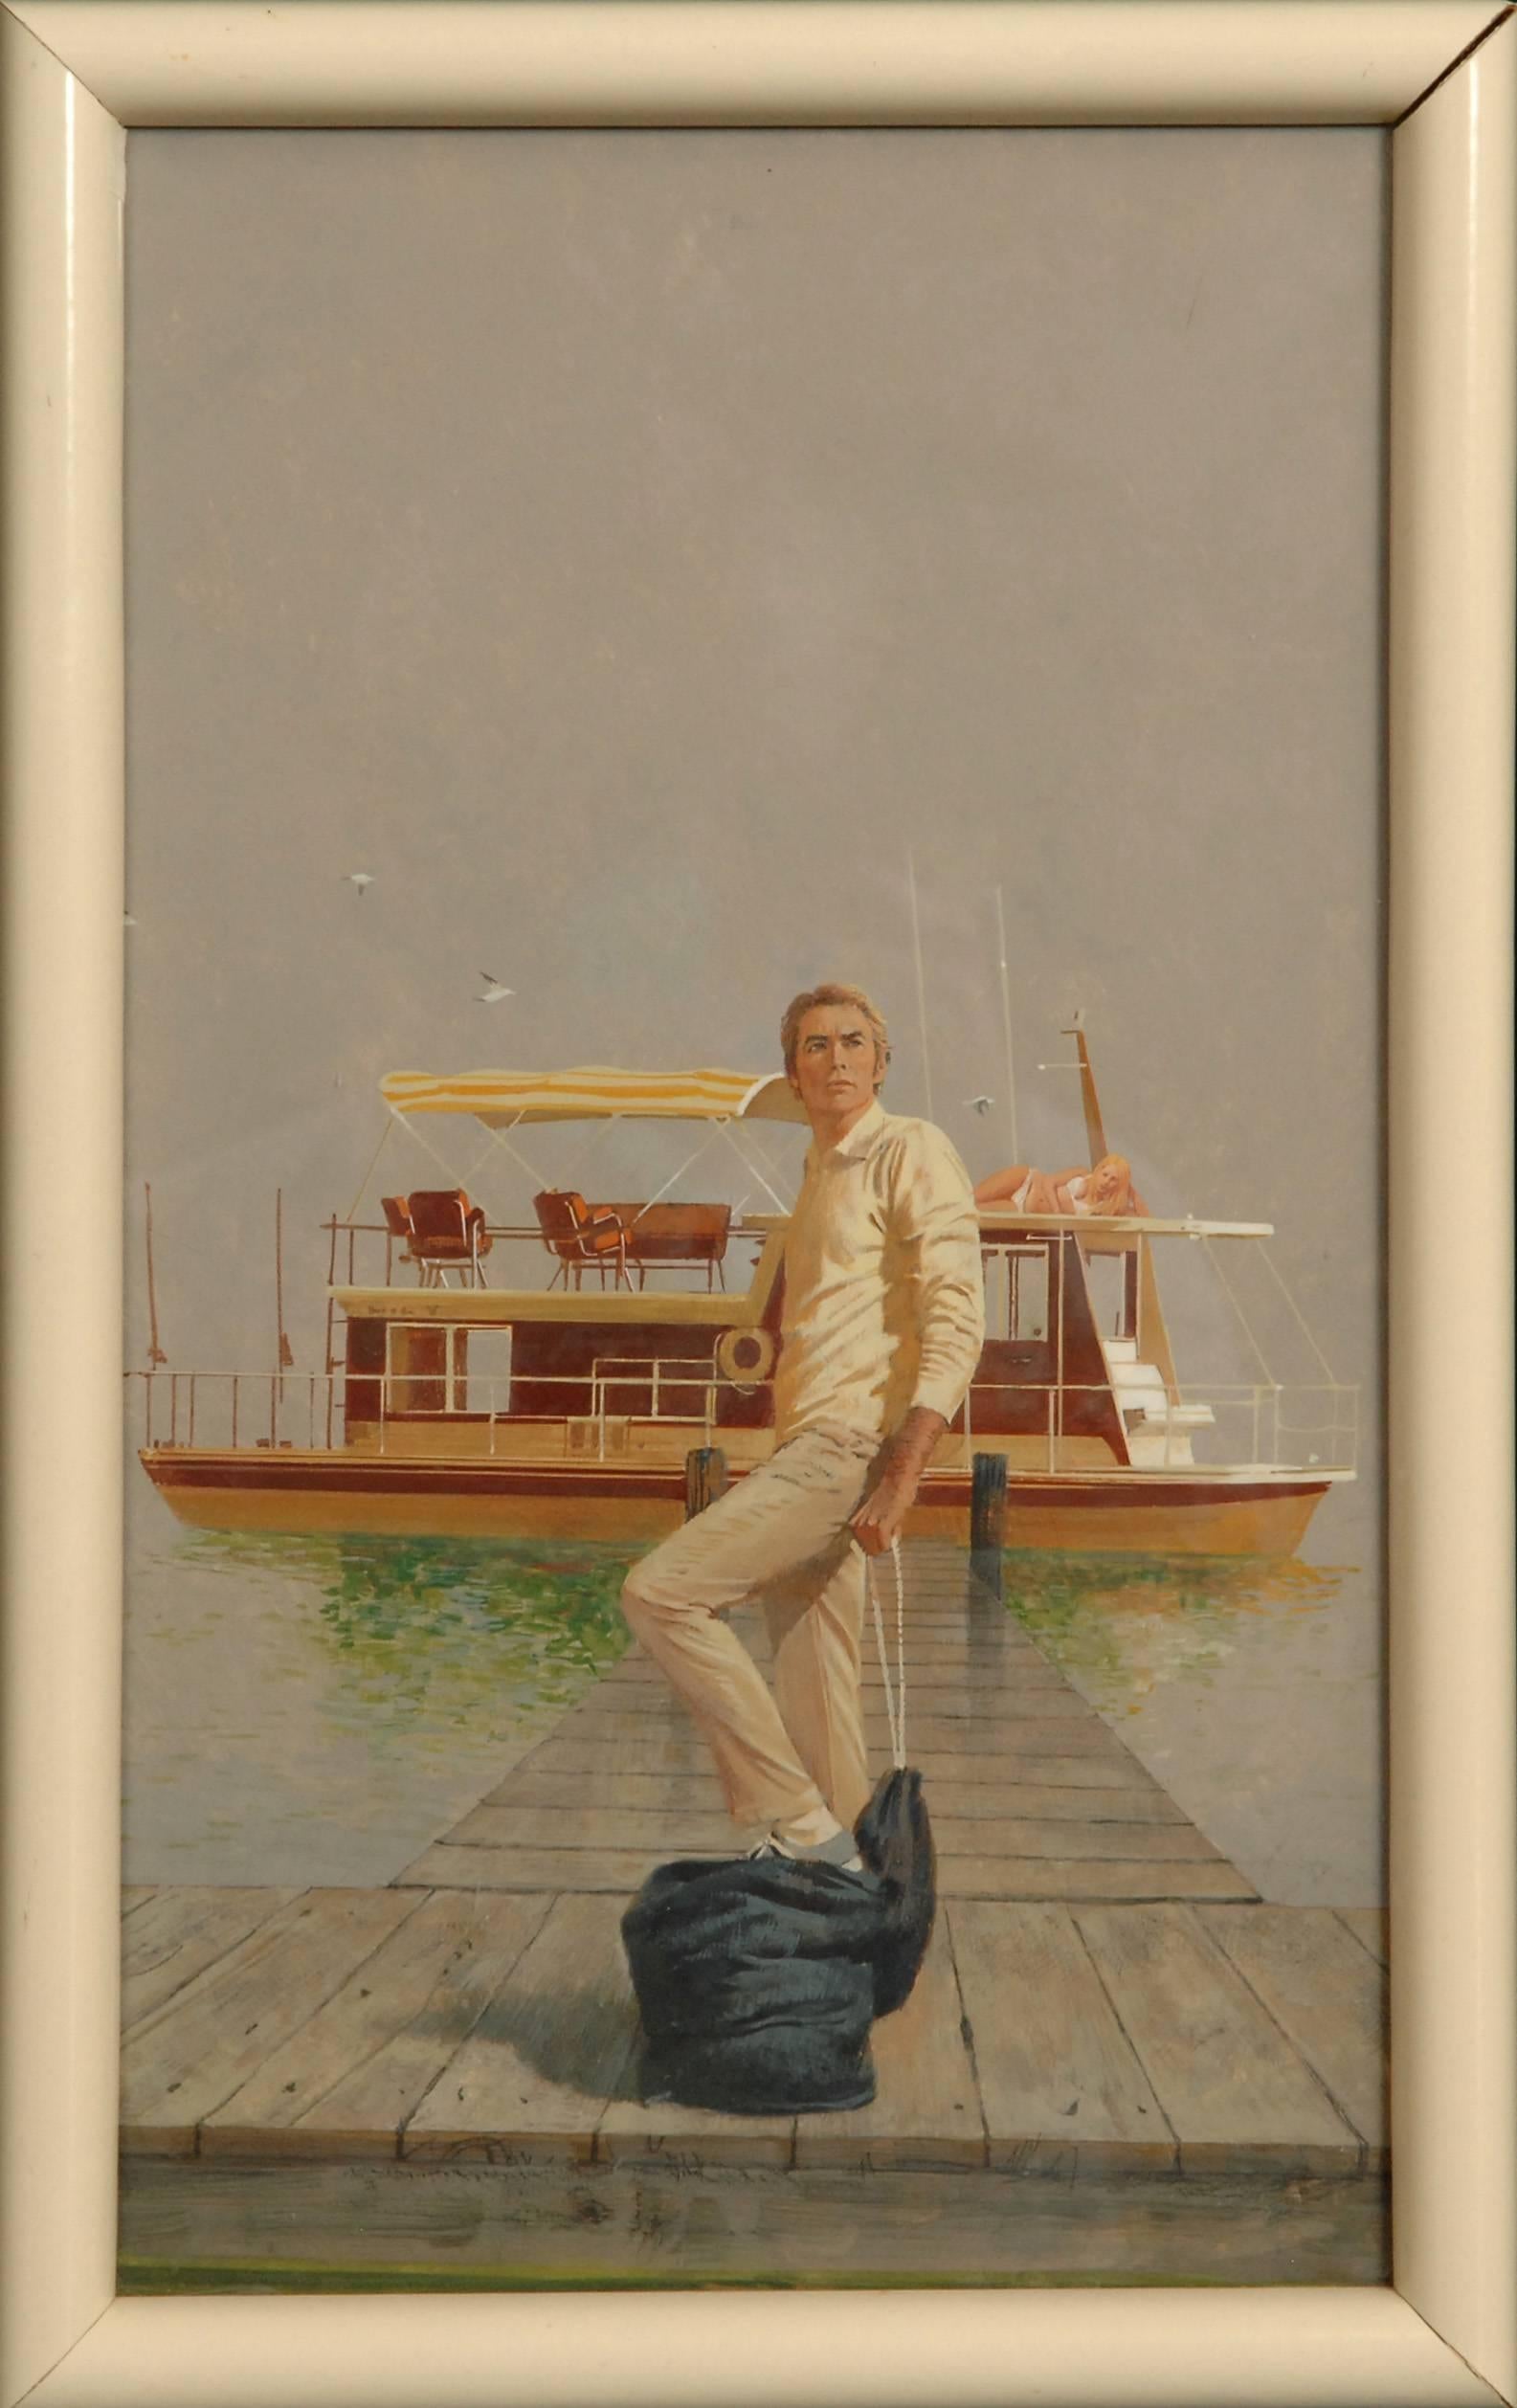 Robert E. McGinnis Portrait Painting - "The Dreadful Lemon Sky" Book Cover